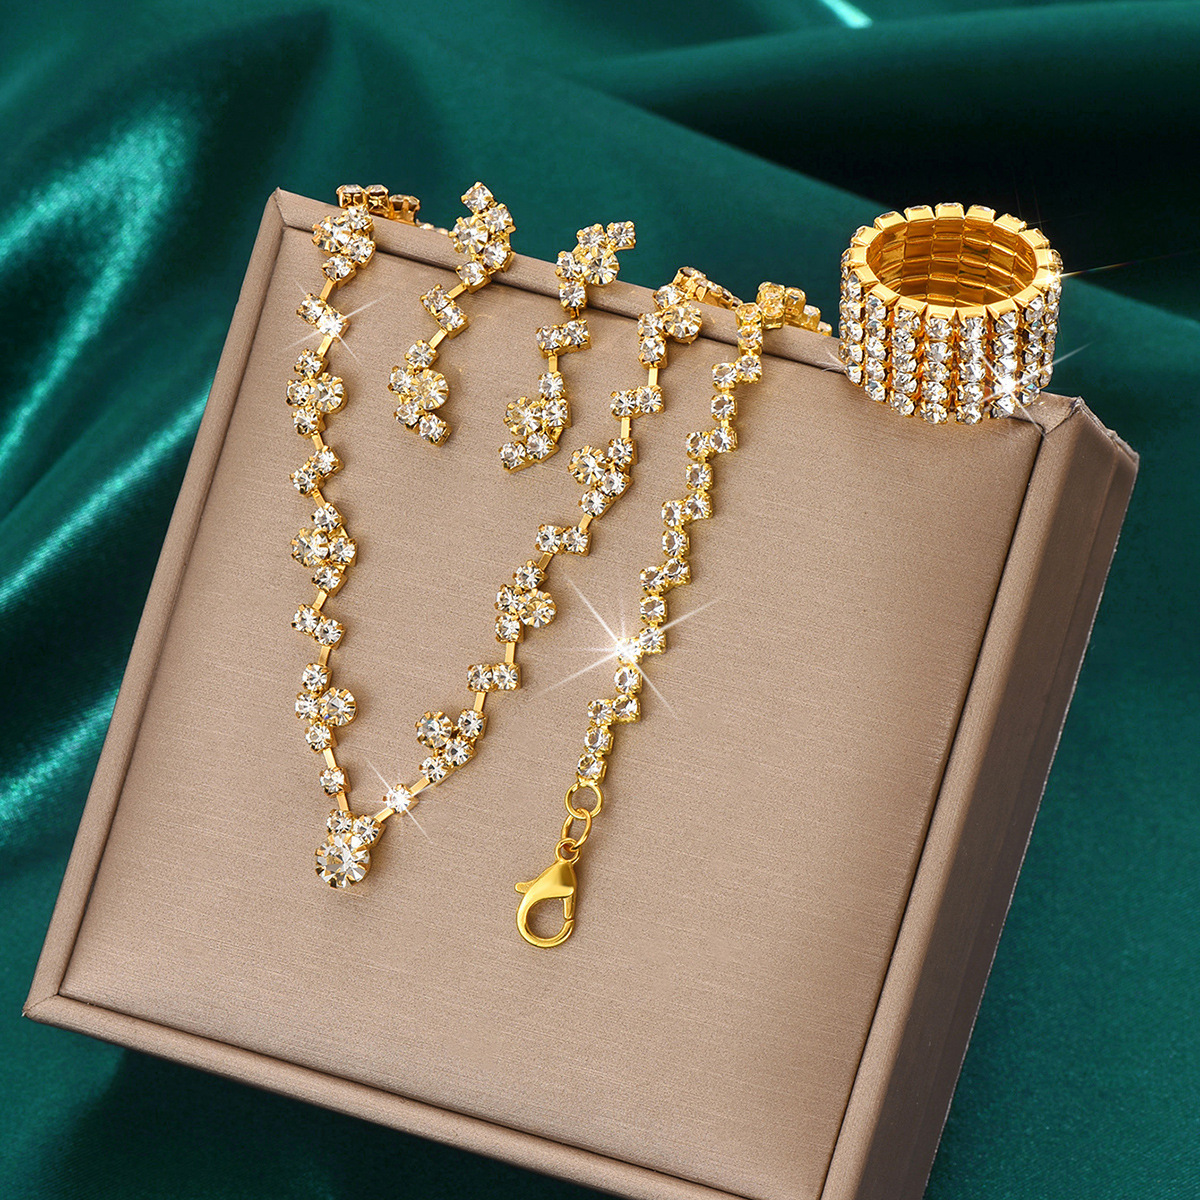 8:424785424-5 Gold necklace earrings bracelet ring set